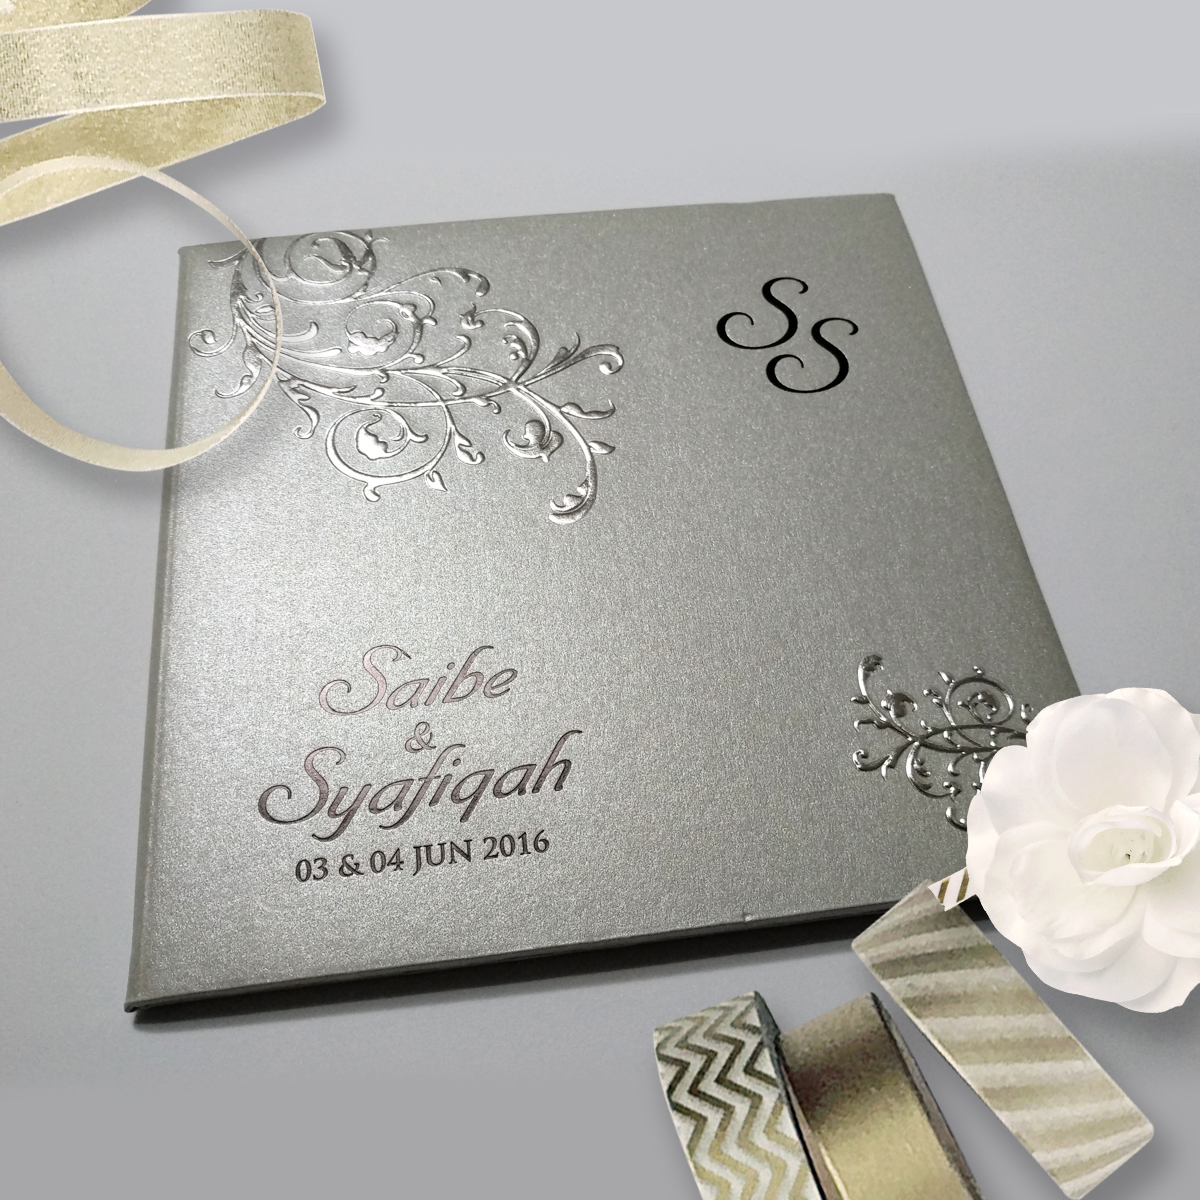 jentayu design kad kahwin hard cover series vip kerawang metallic silver hot stamping silver and black with inlay wedding cards malaysia 